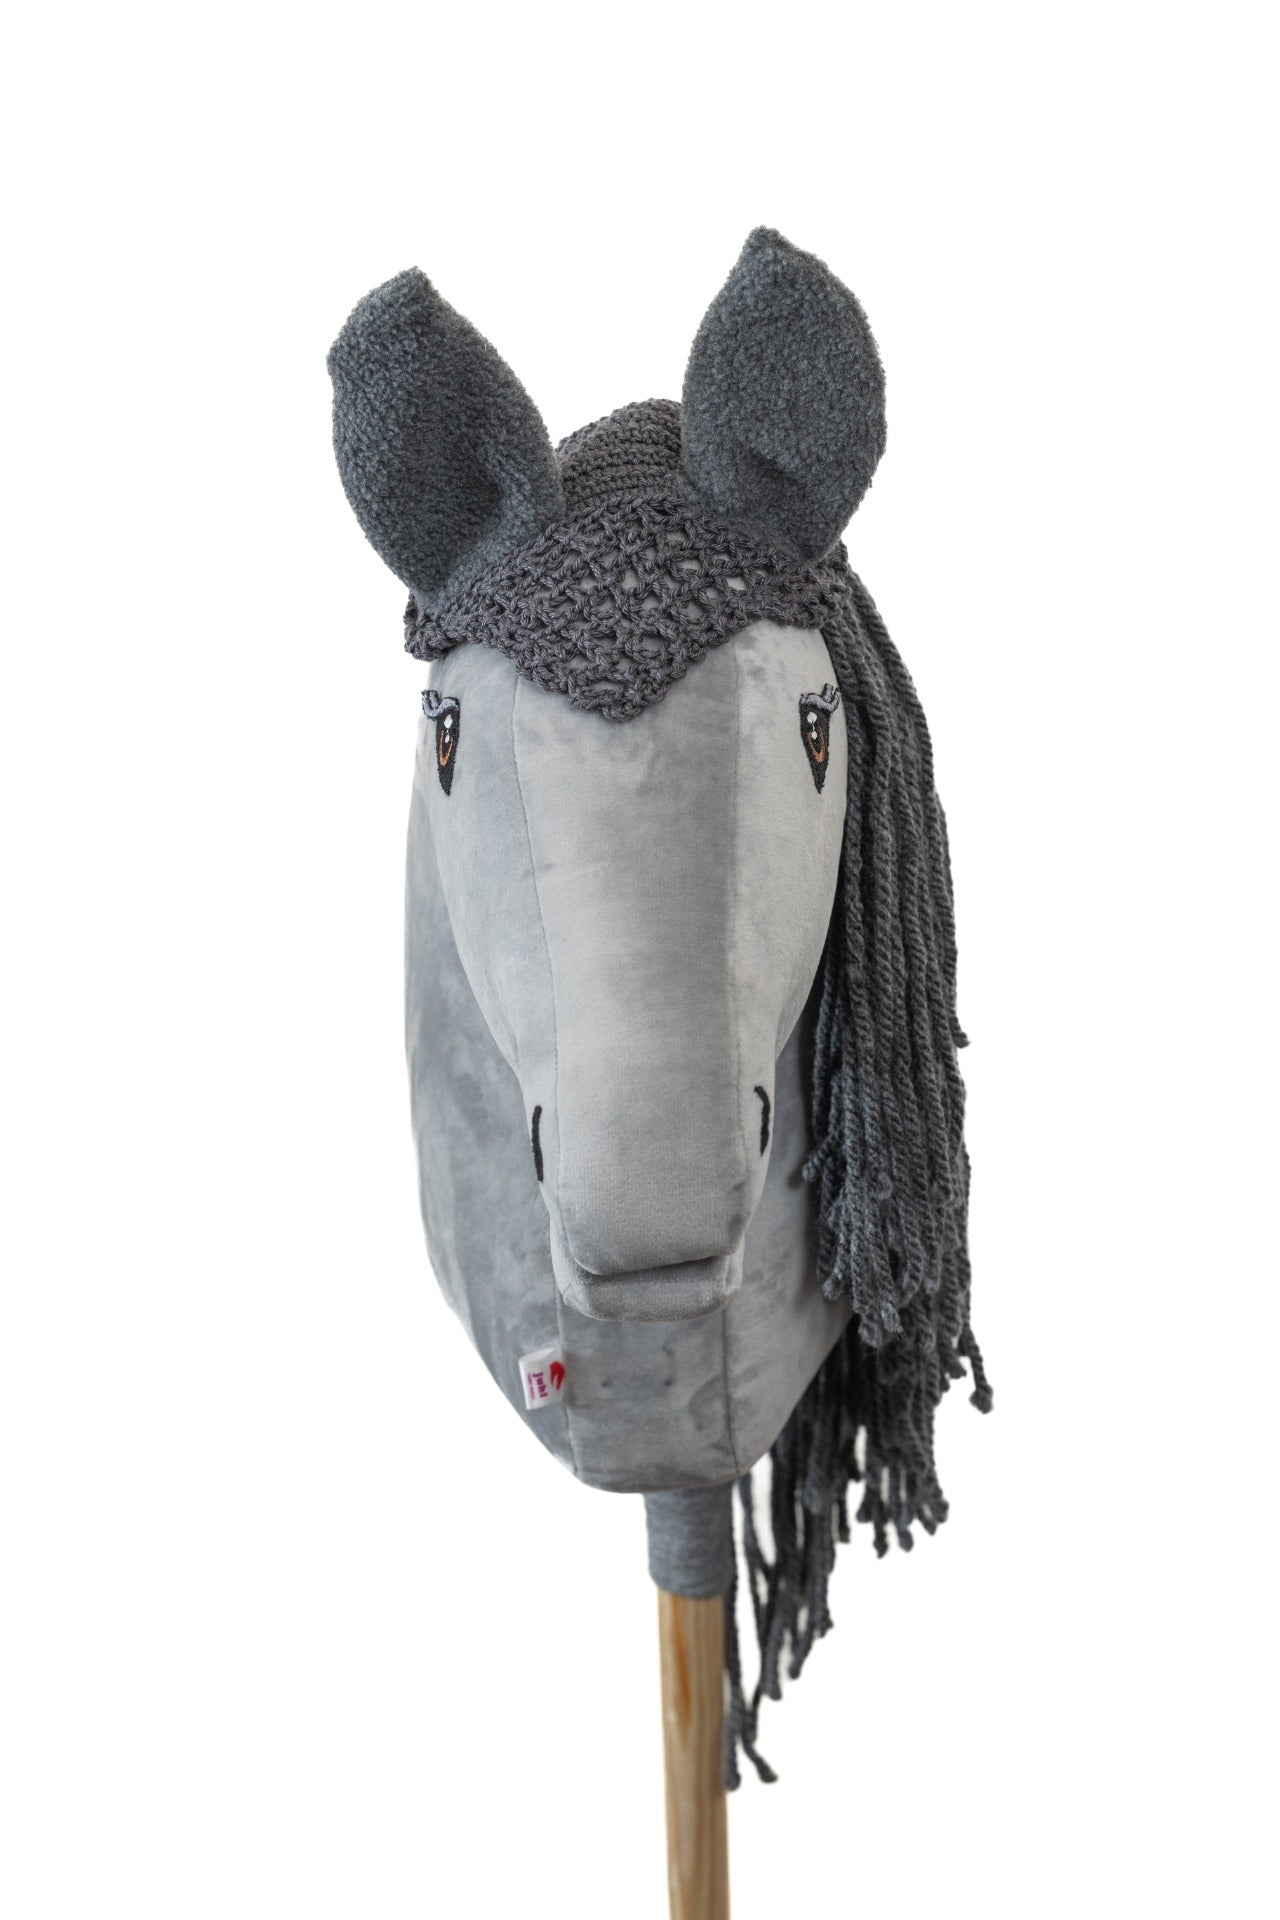 Ear net crocheted - Grey with grey ears - Adult horse